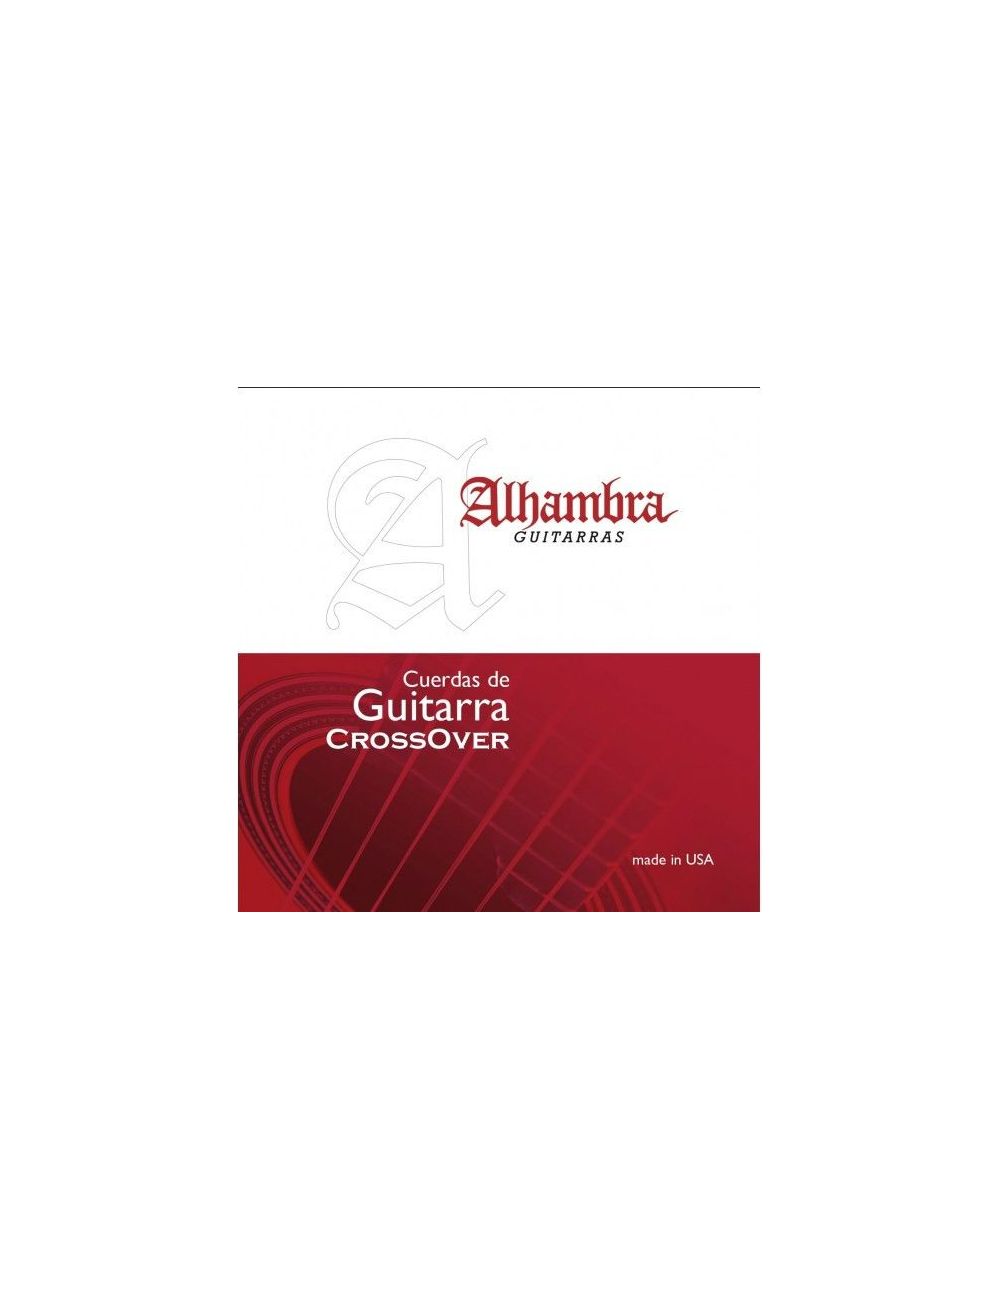 Crossover guitar strings Alhambra 9883 9883 Guitar strings